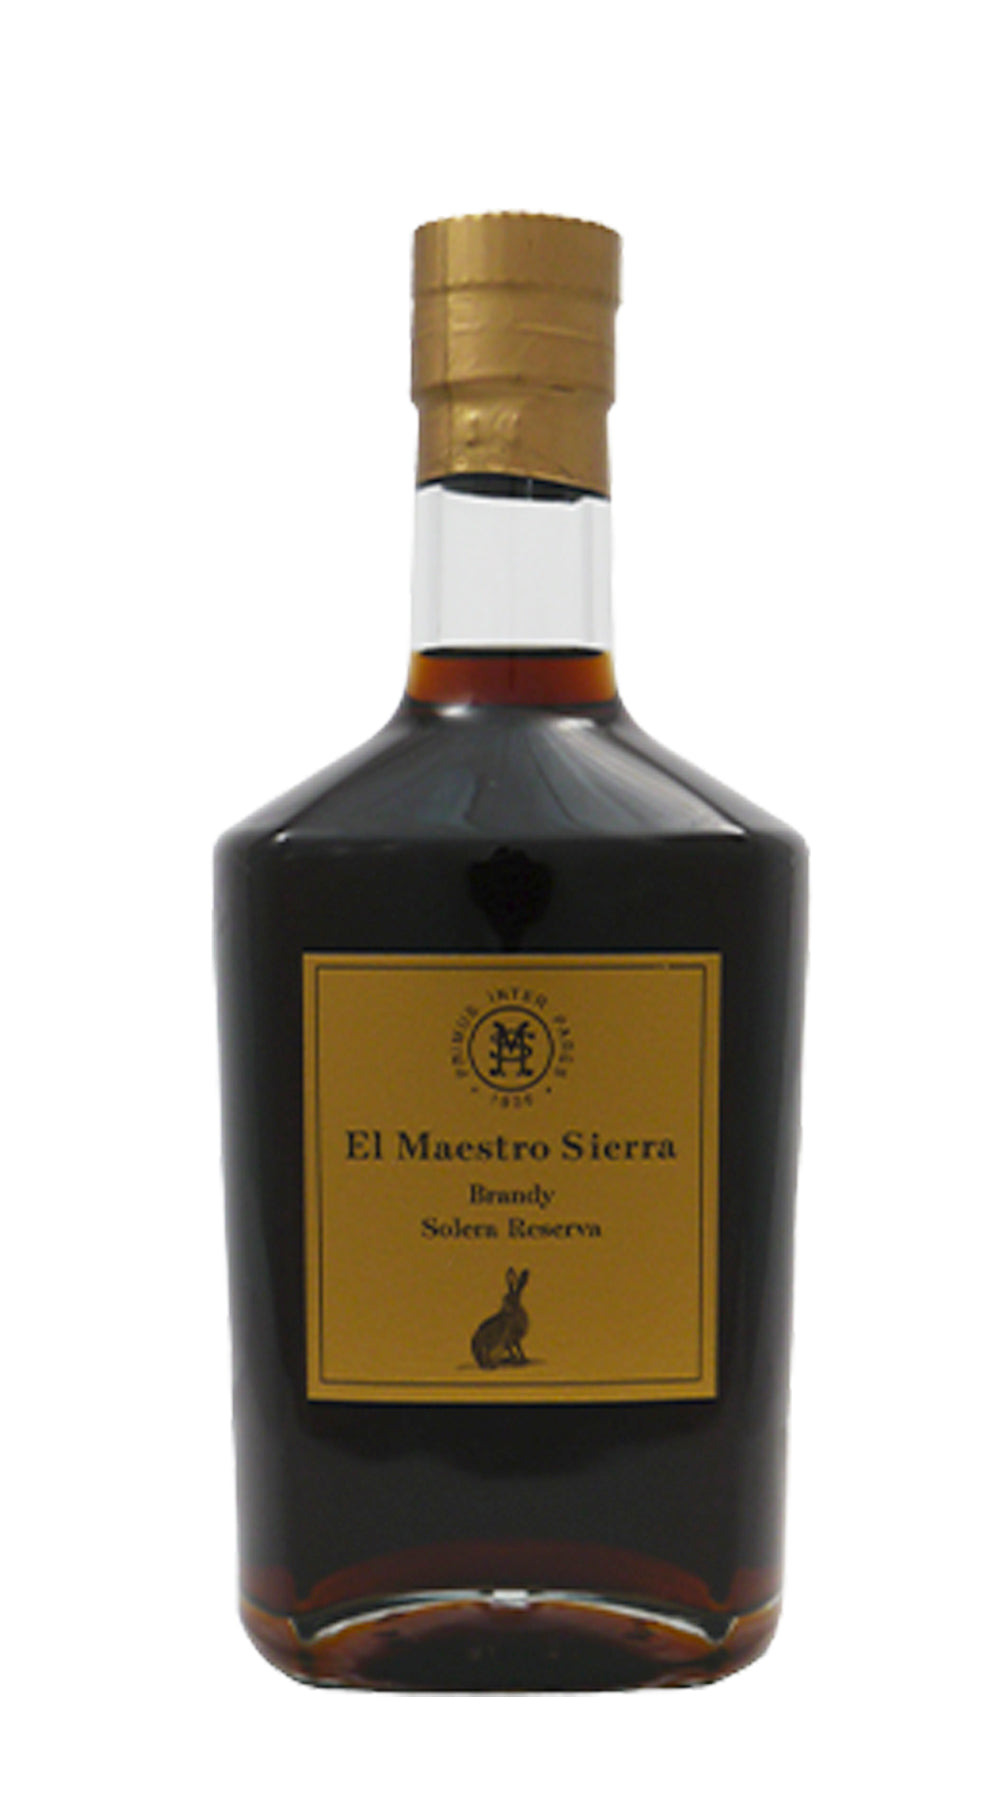 El Maestro Sierra Brandy de Jerez Solera Reserva